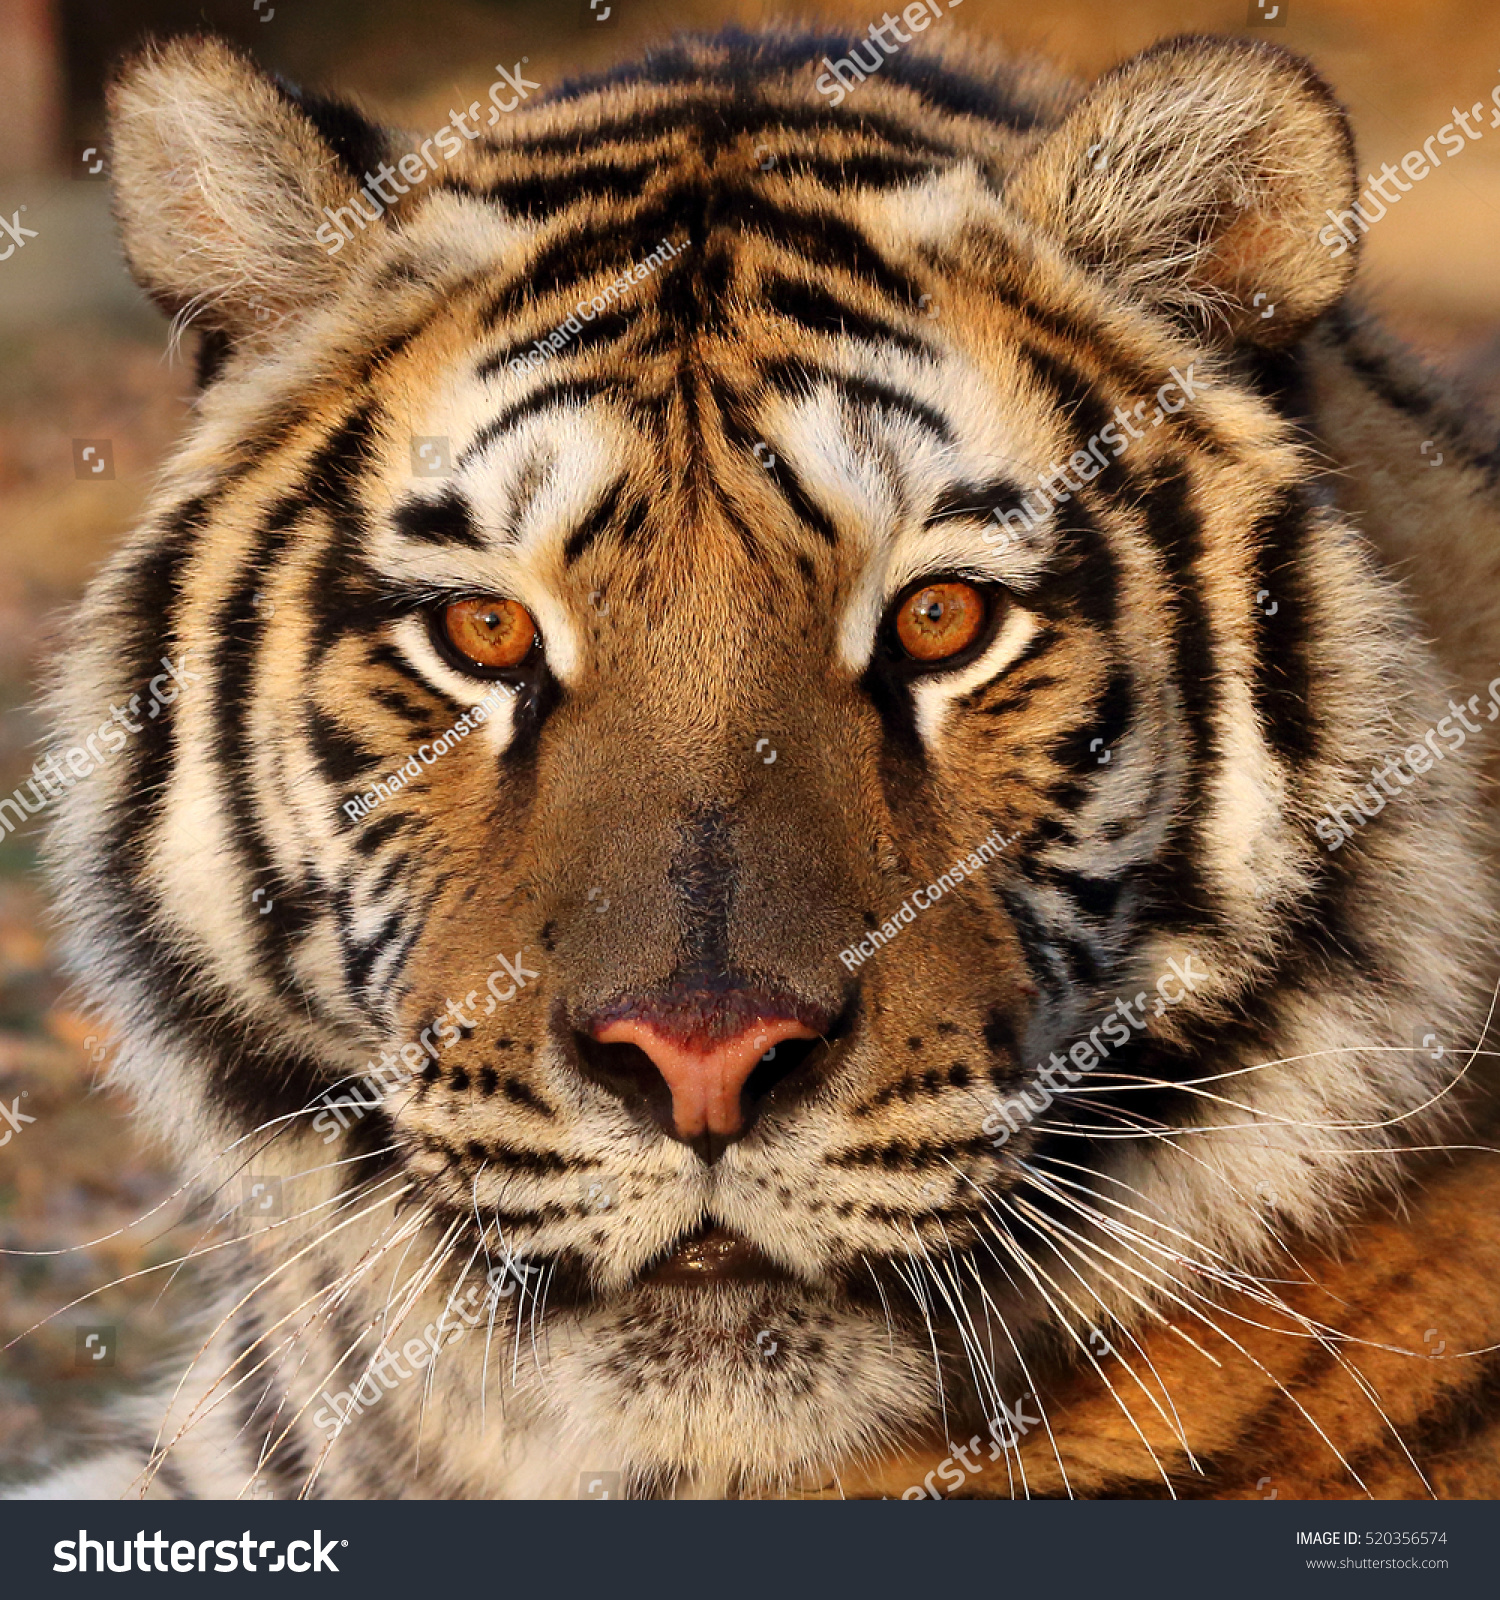 Tiger close-up of face #520356574